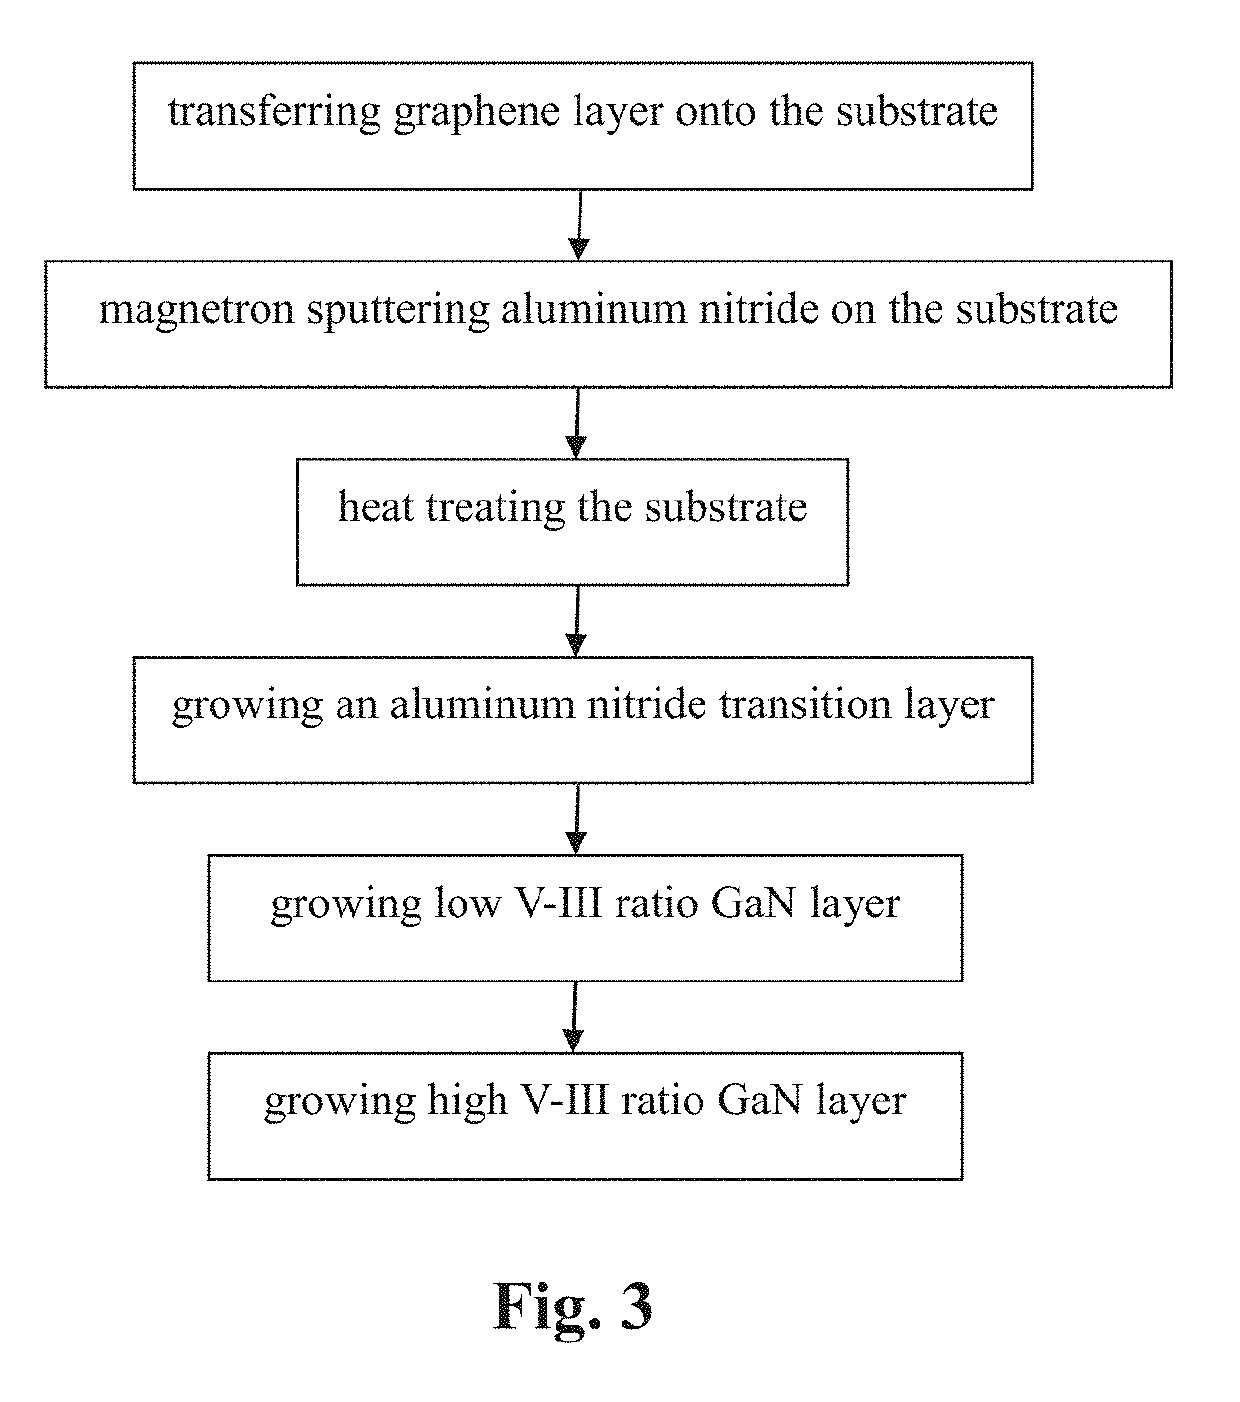 Method for growing gallium nitride based on graphene and magnetron sputtered aluminium nitride